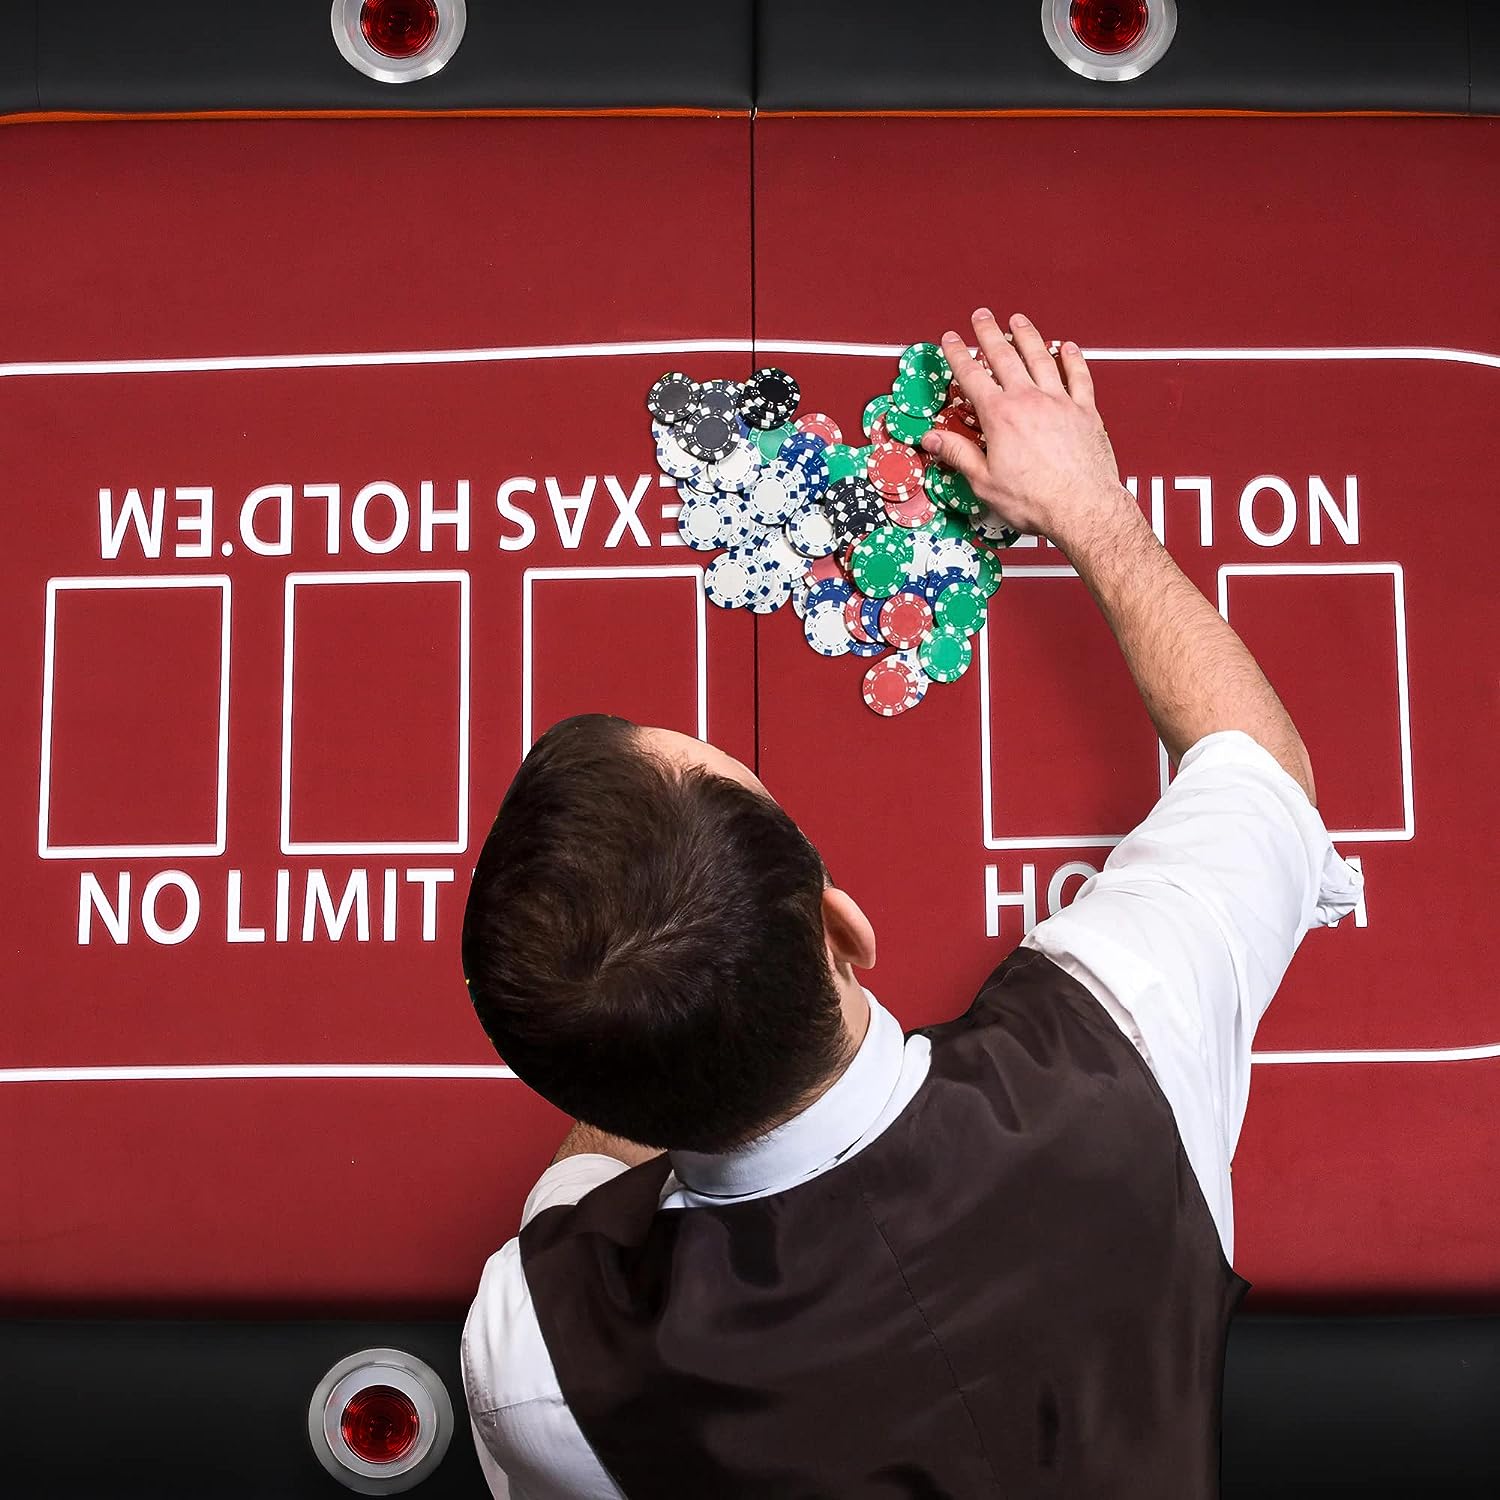 90.5" Folding Poker Table 10 Player Casino Texas Holdem Table for Blackjack Board Game, Red